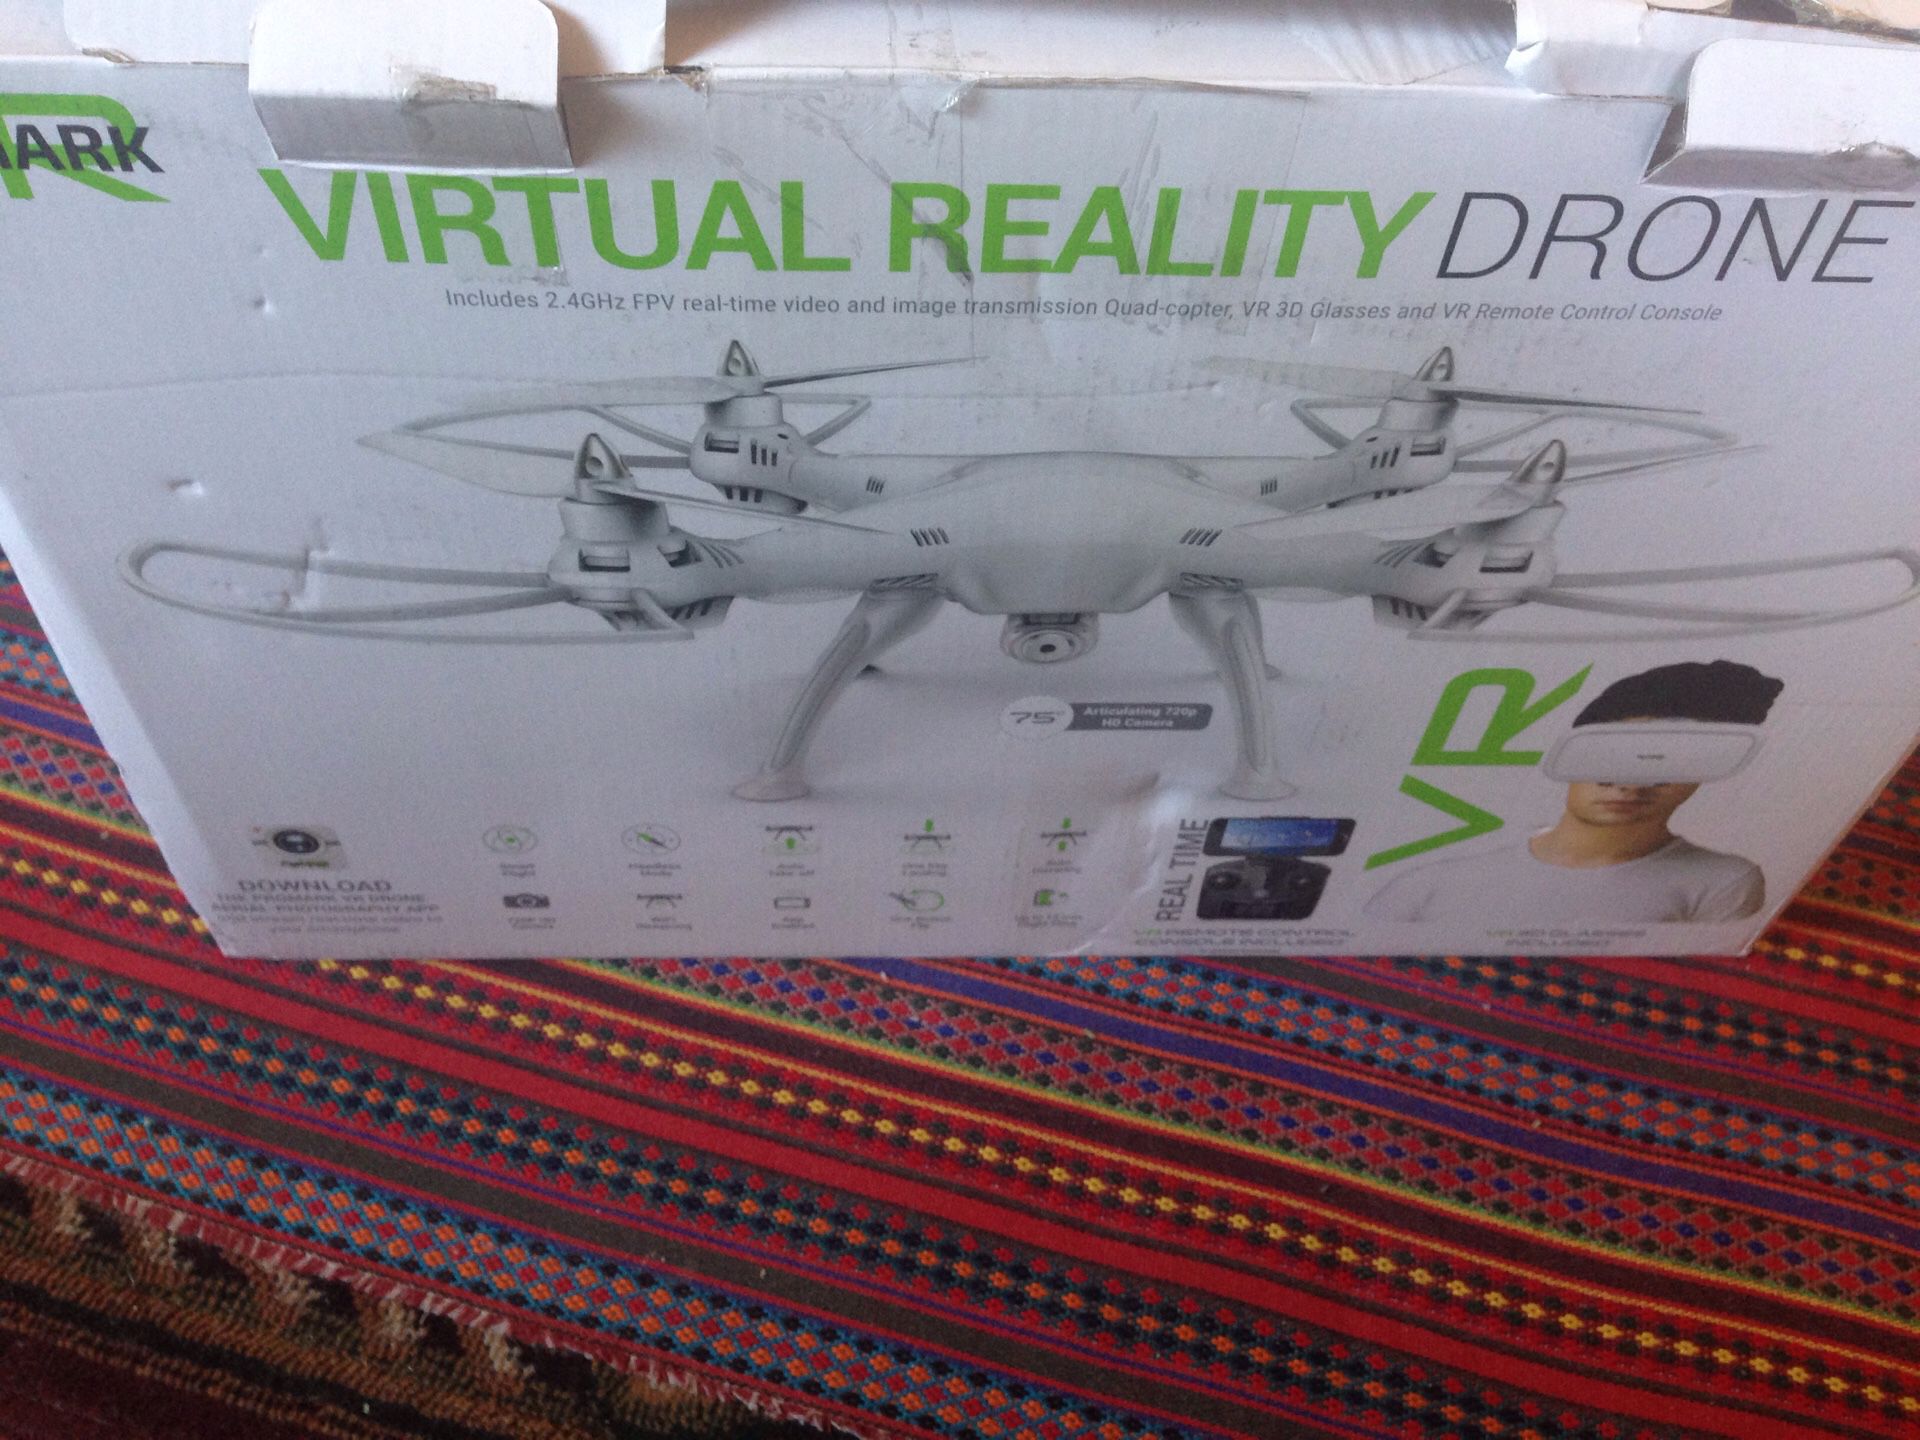 Virtual reality drone